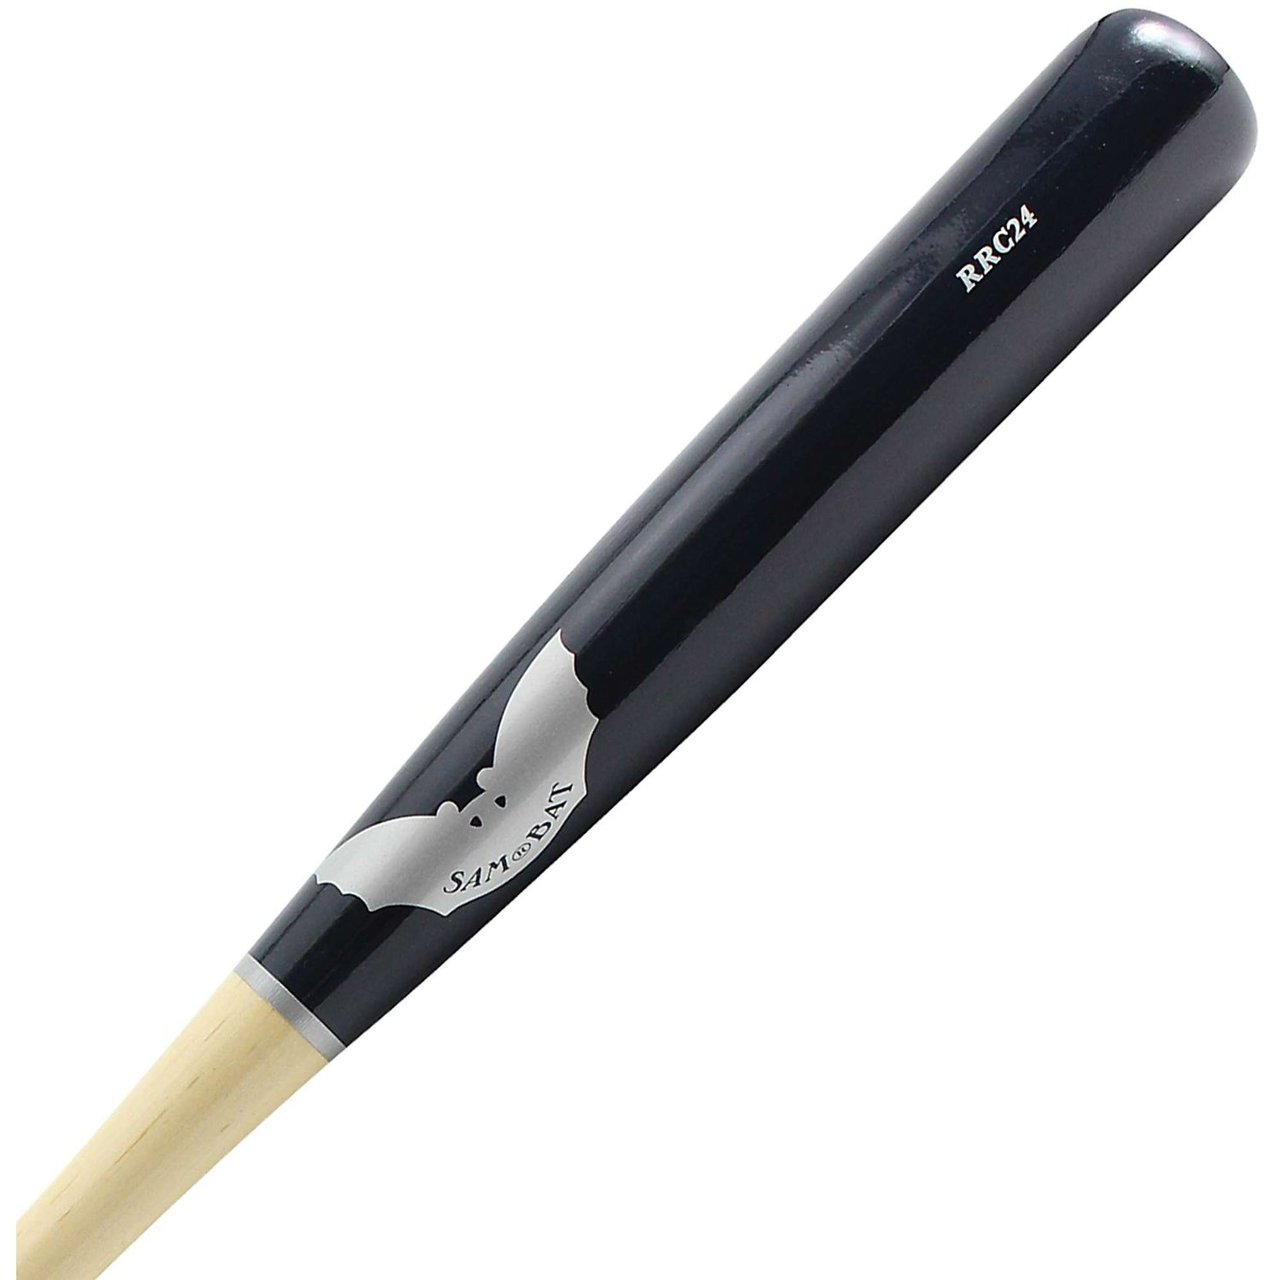 sam-bat-robinson-cano-rrc24-maple-wood-baseball-bat-34-inch RRC24-34-inch  883496004864 Robinson Cano Wood Maple Sam Bat. Sam Bats Select Stock bats